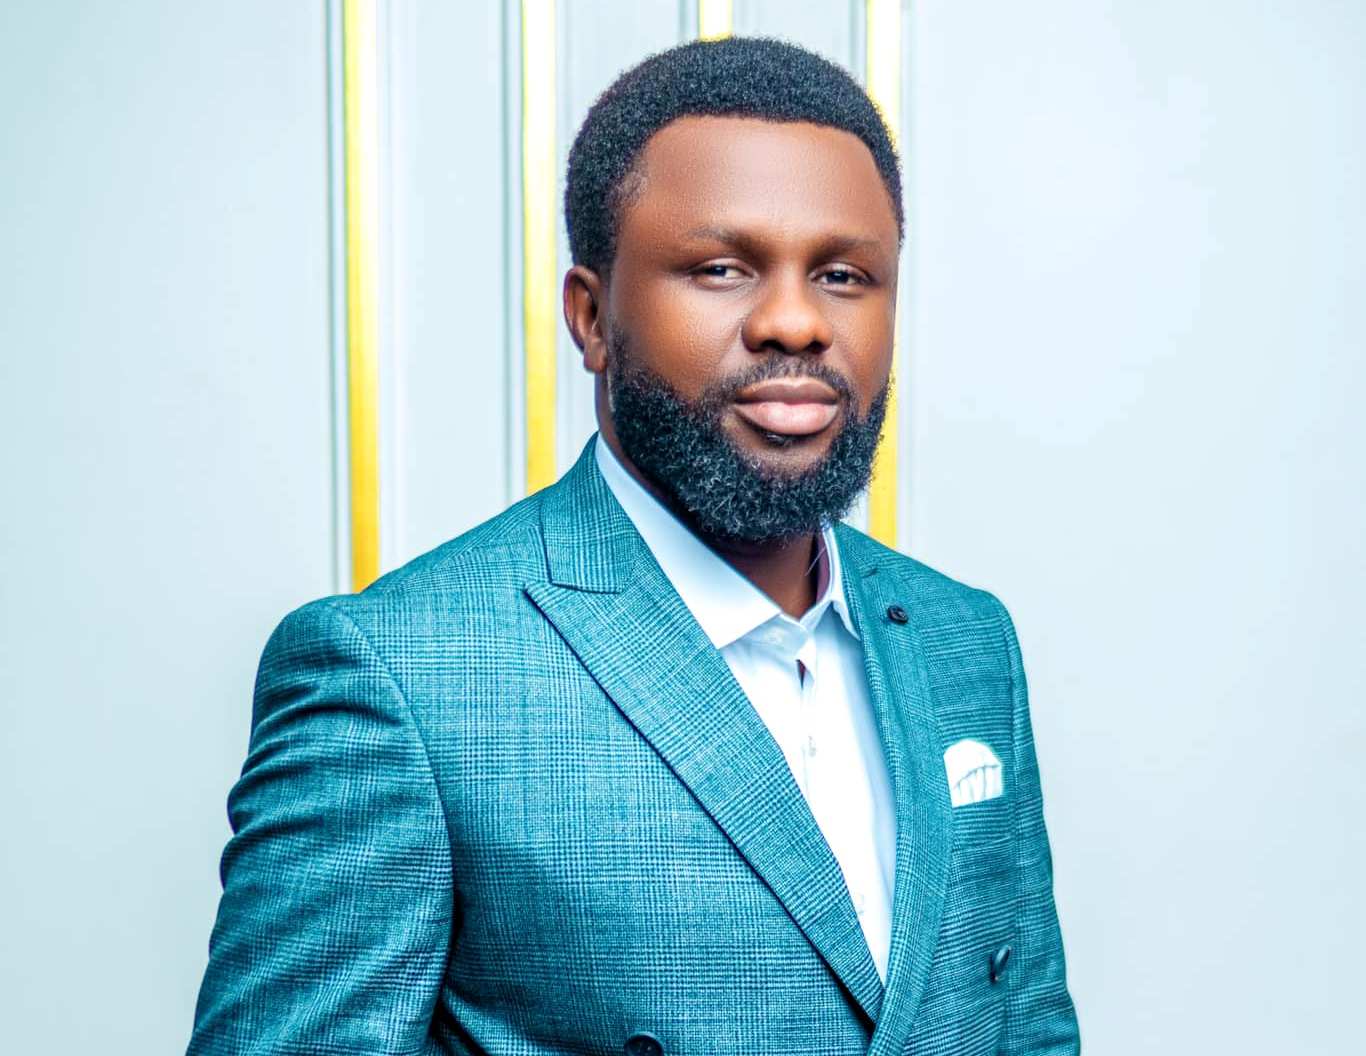 Chijioke Junior Advocates for Child-Focused Films in Nollywood